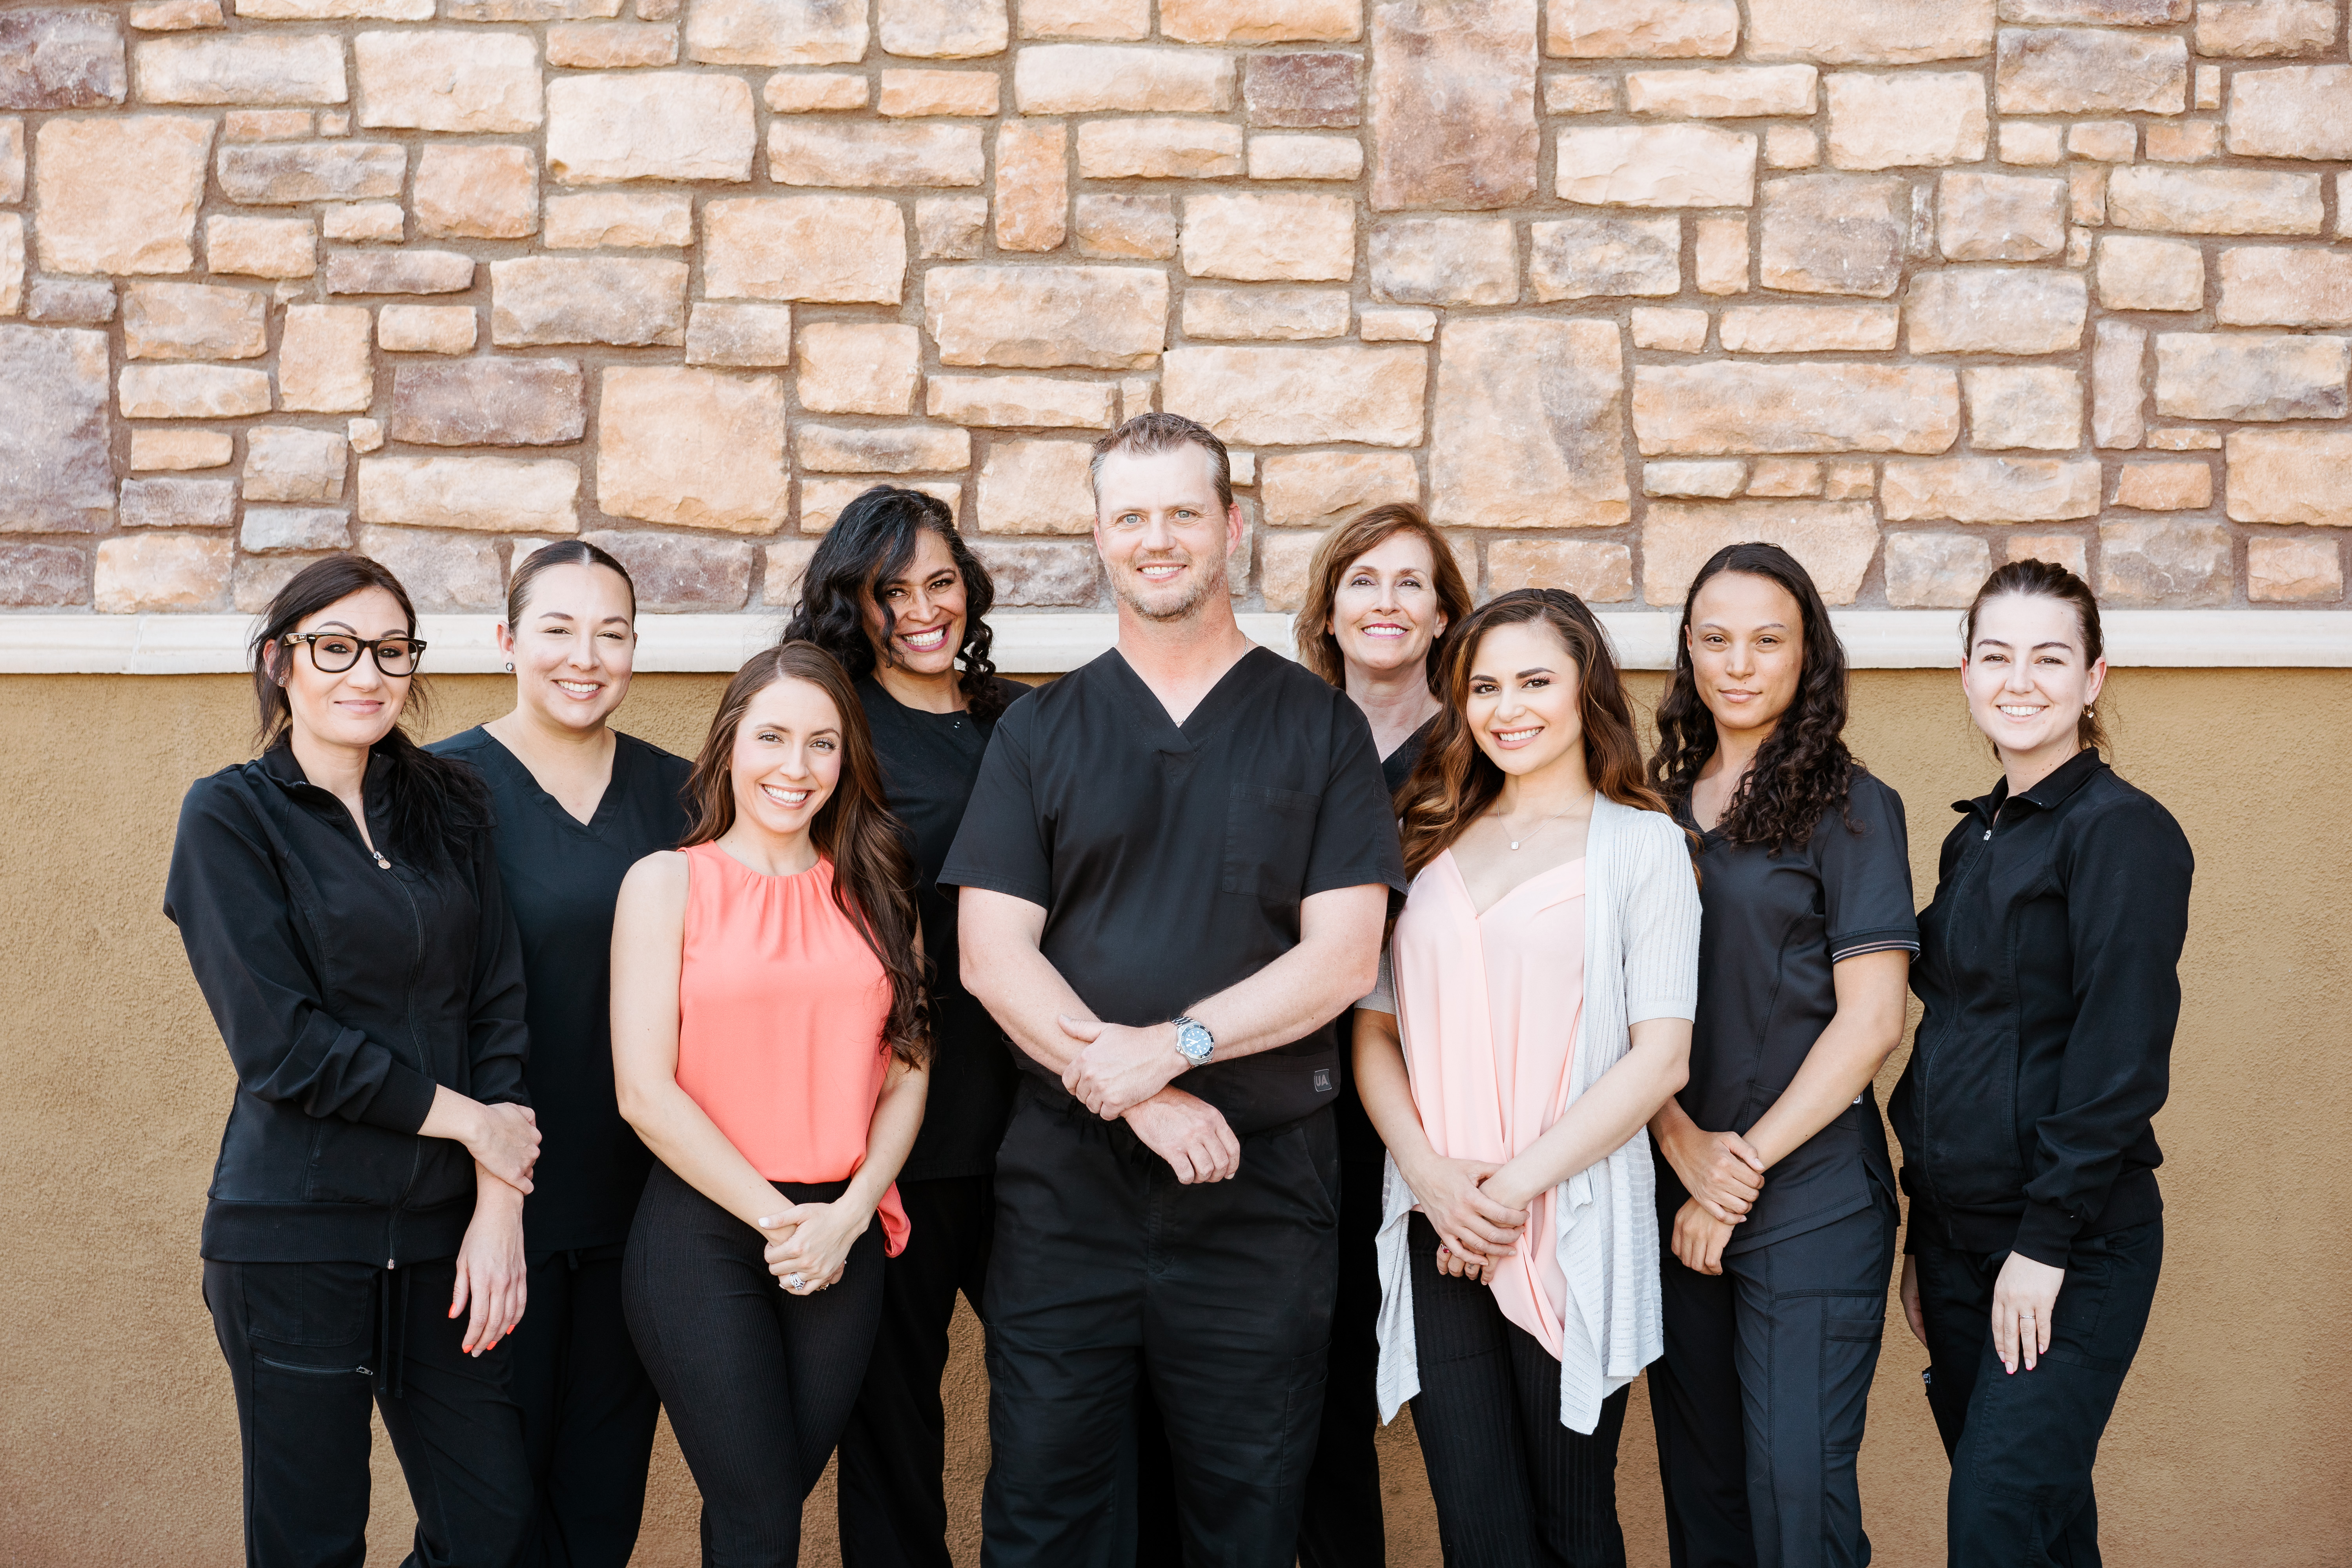 Meet Our Team Dr. Dirk A Newman Newman Dental. General, Cosmetic, Restorative, Preventative Dentistry Dentist in Tucson, AZ 85712